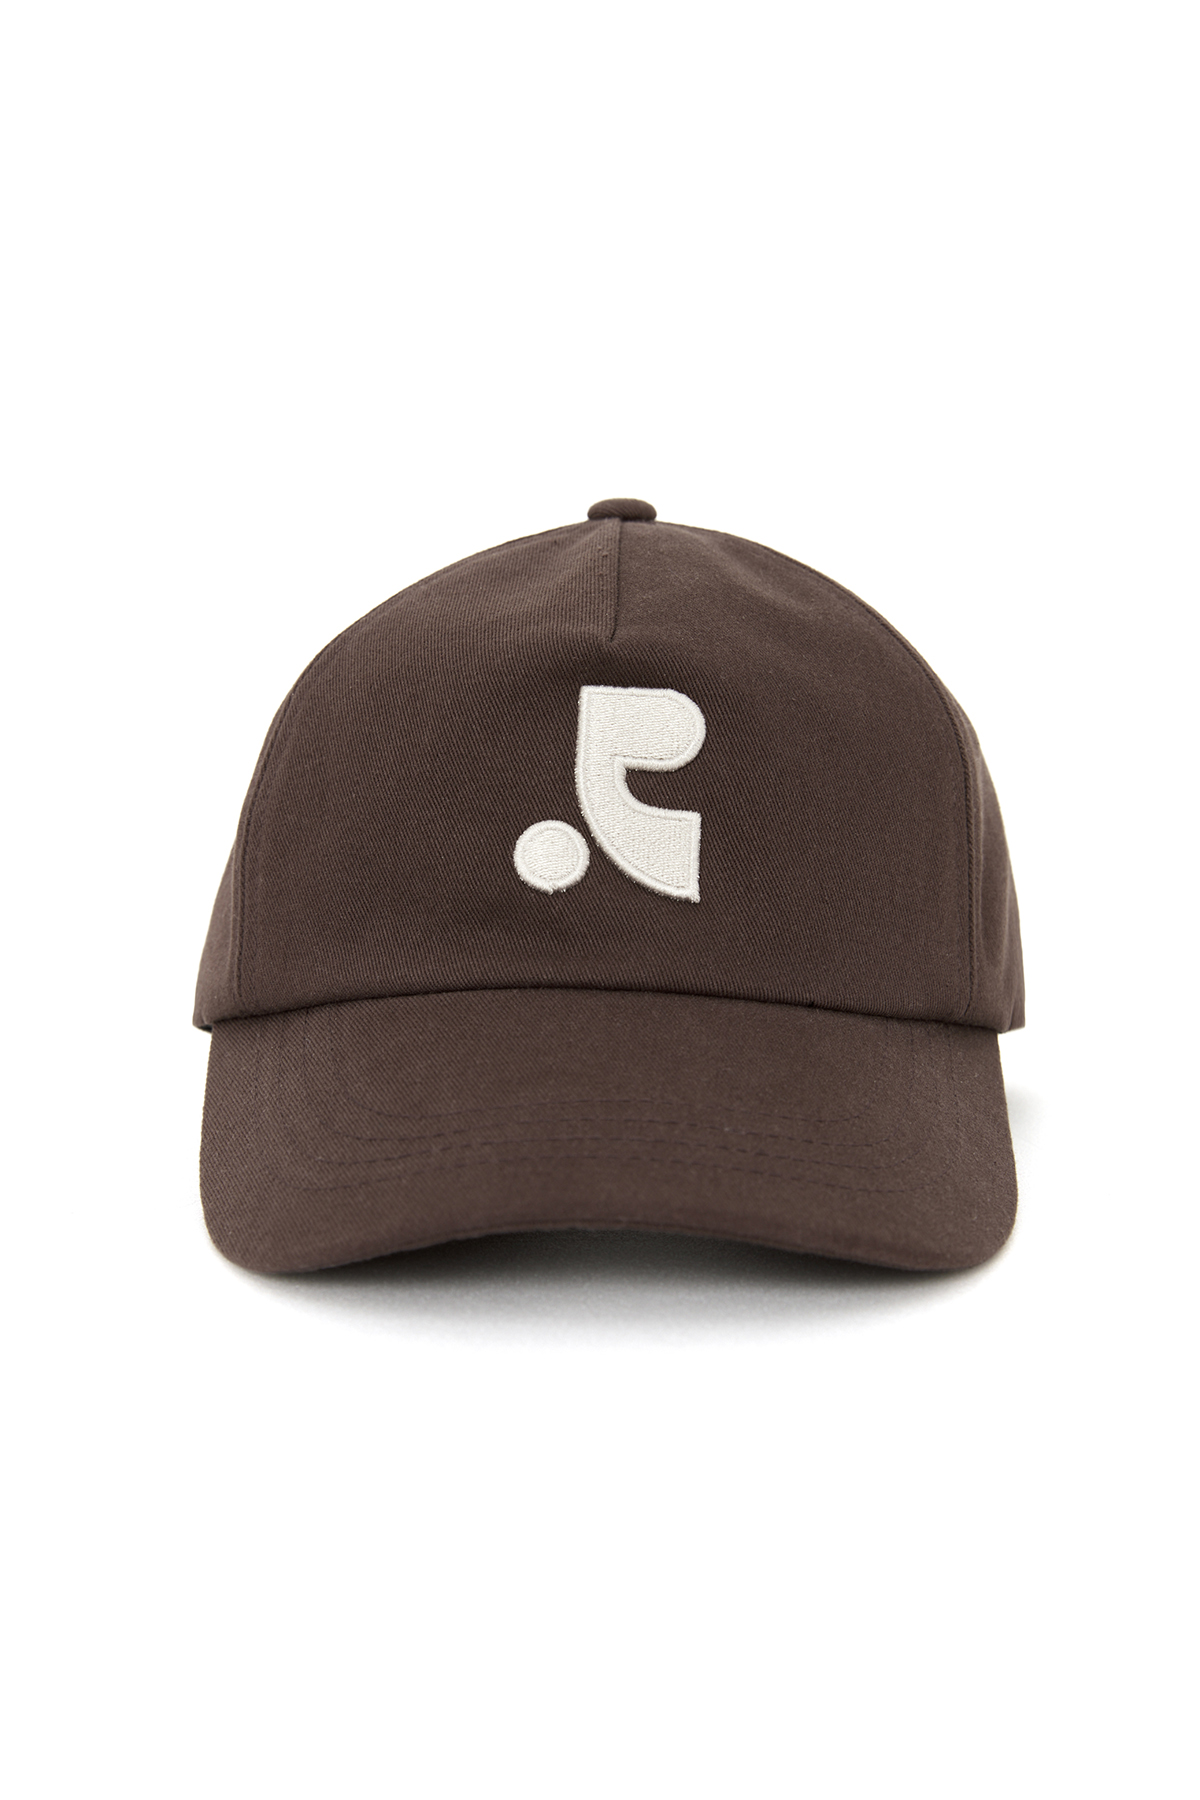 RR LOGO BALL CAP - BROWN